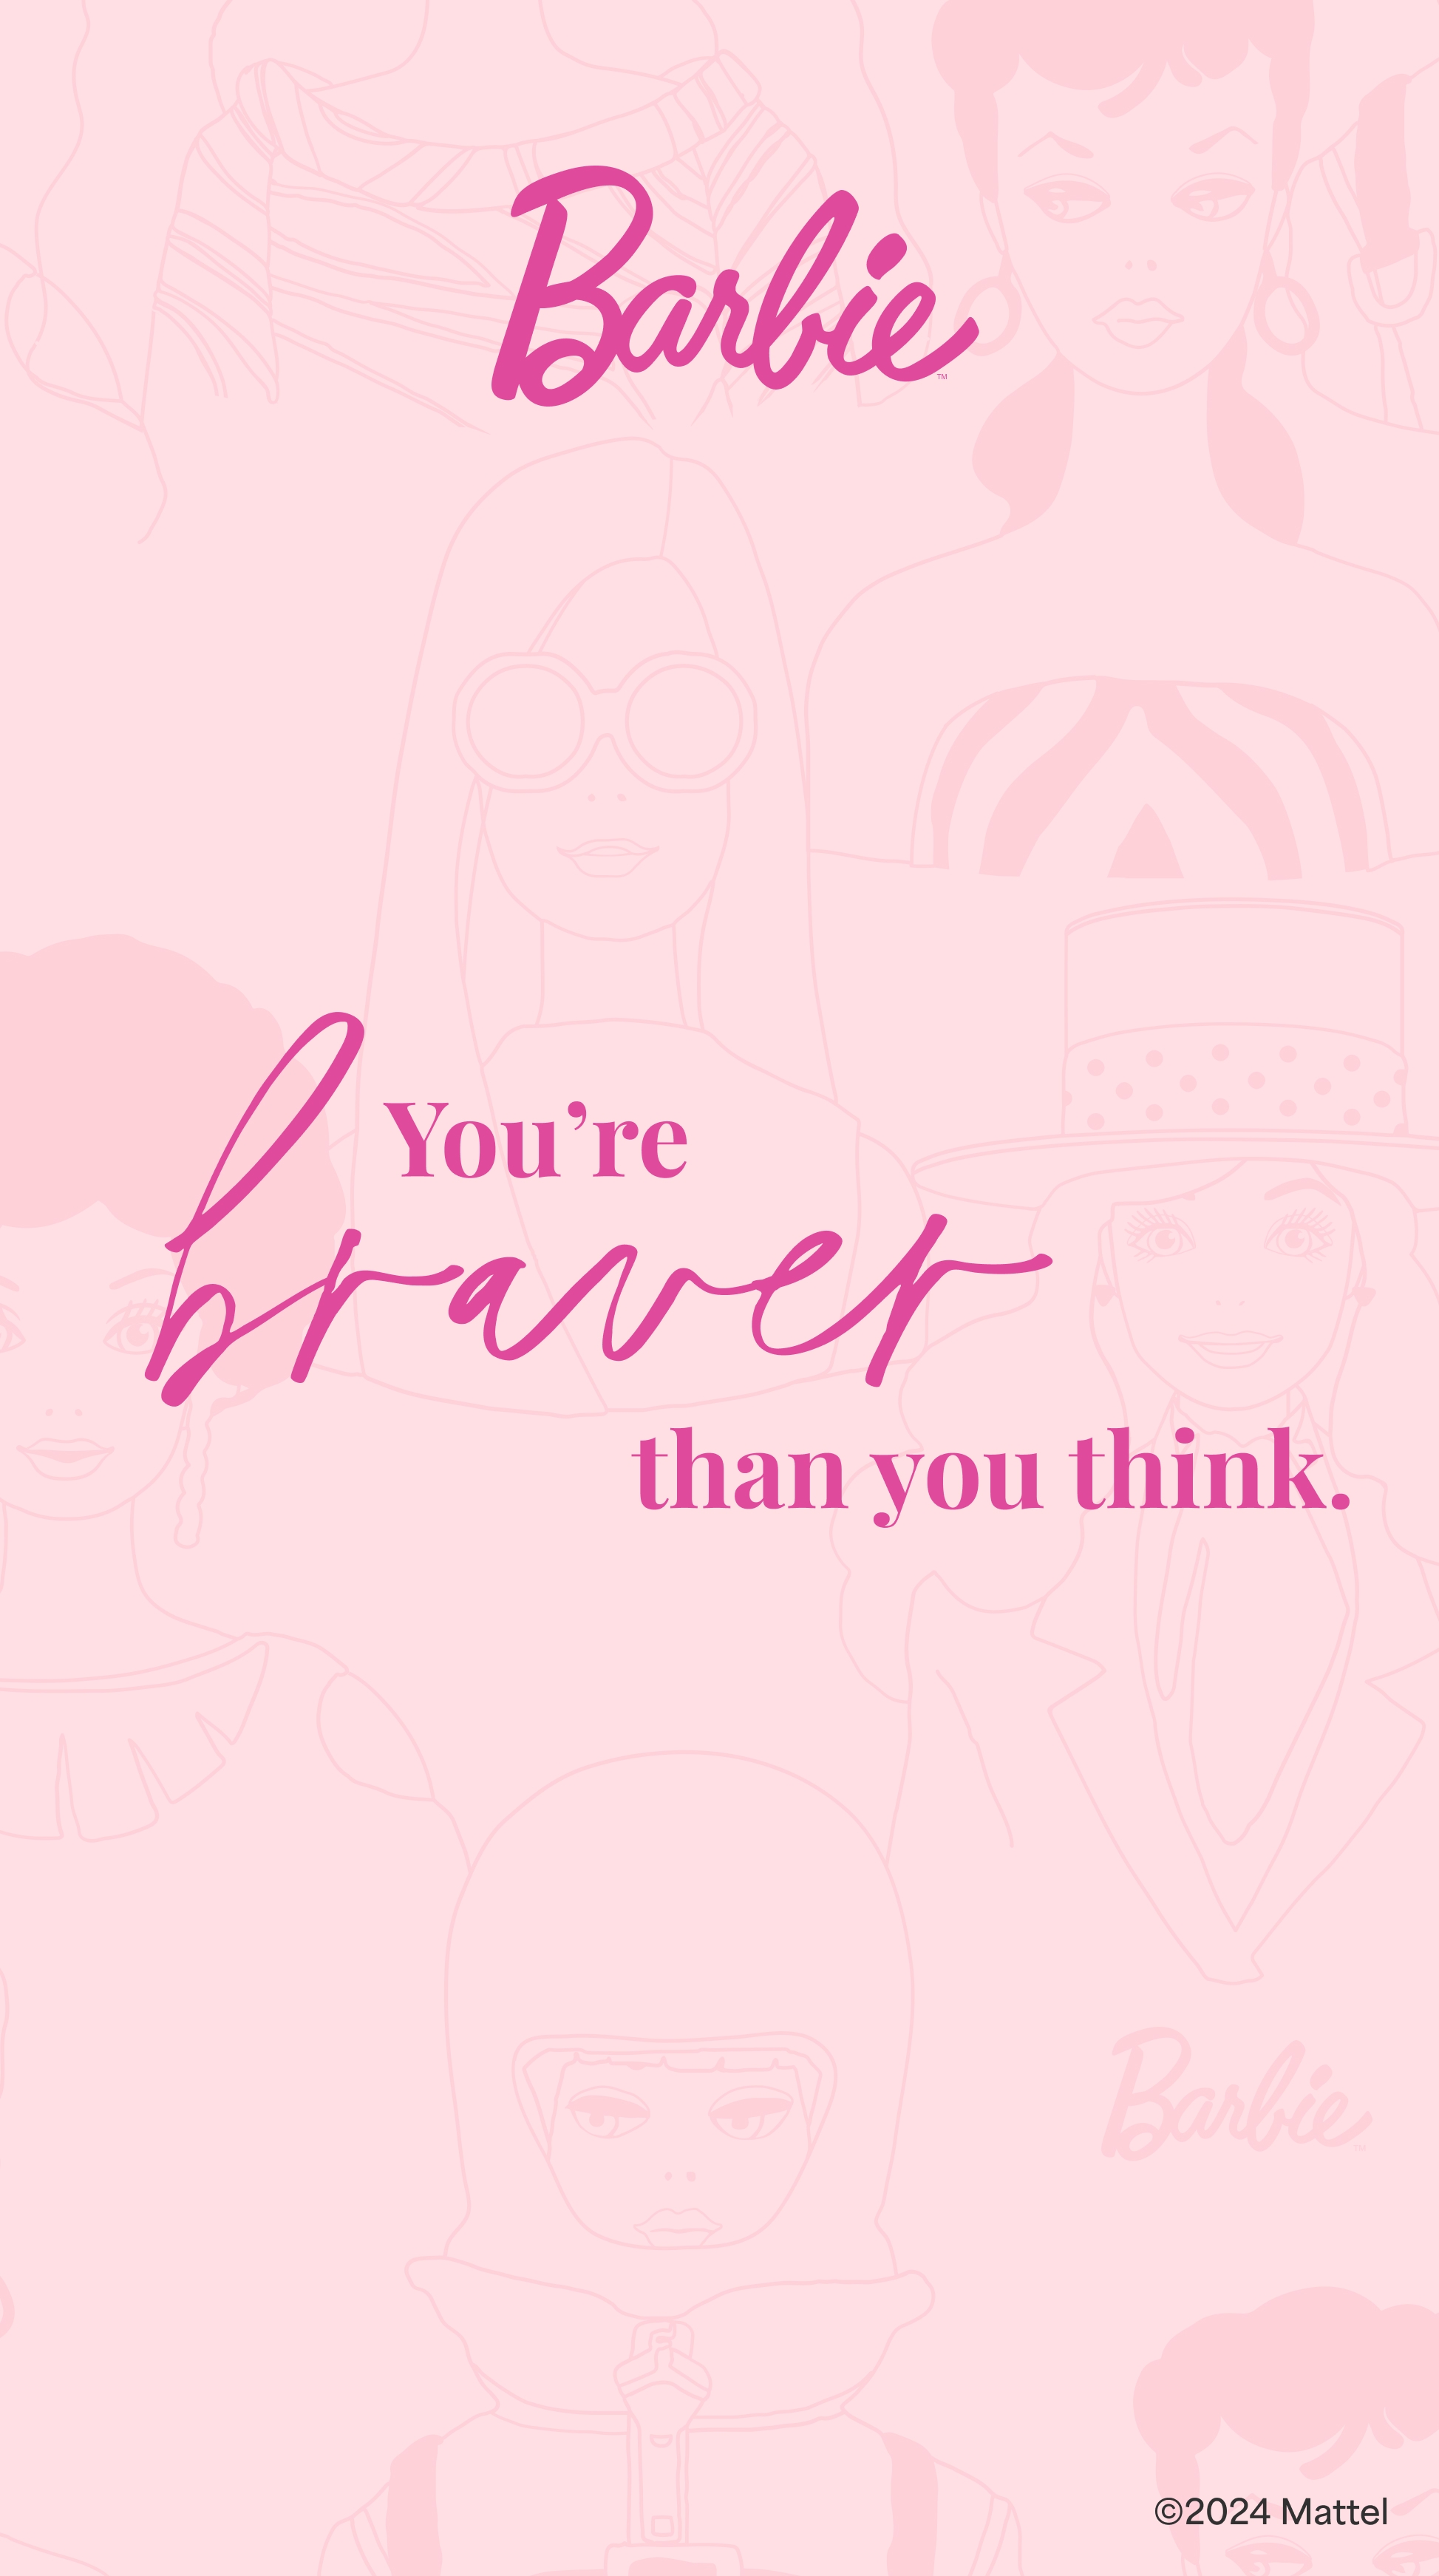 Braver Than You Think